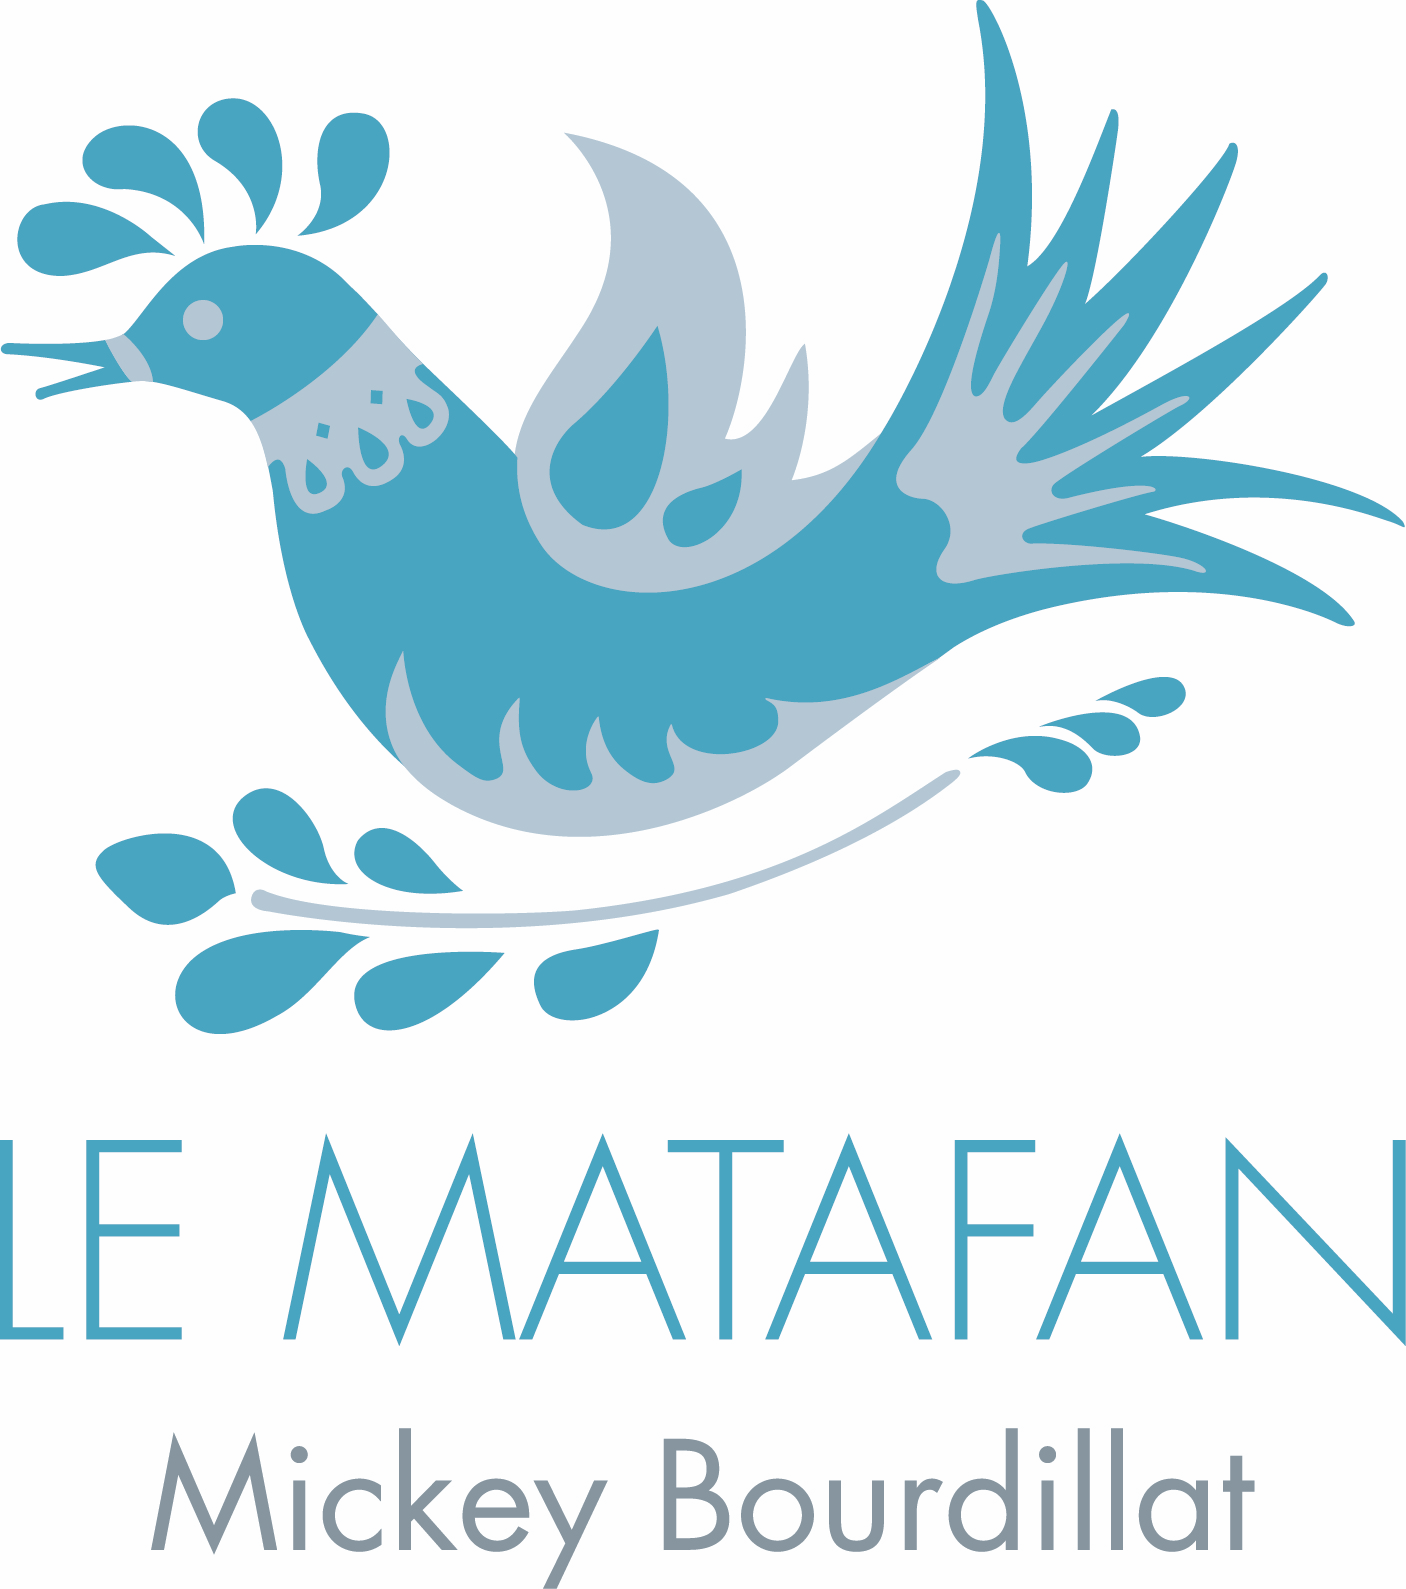 Restaurant Le Matafan